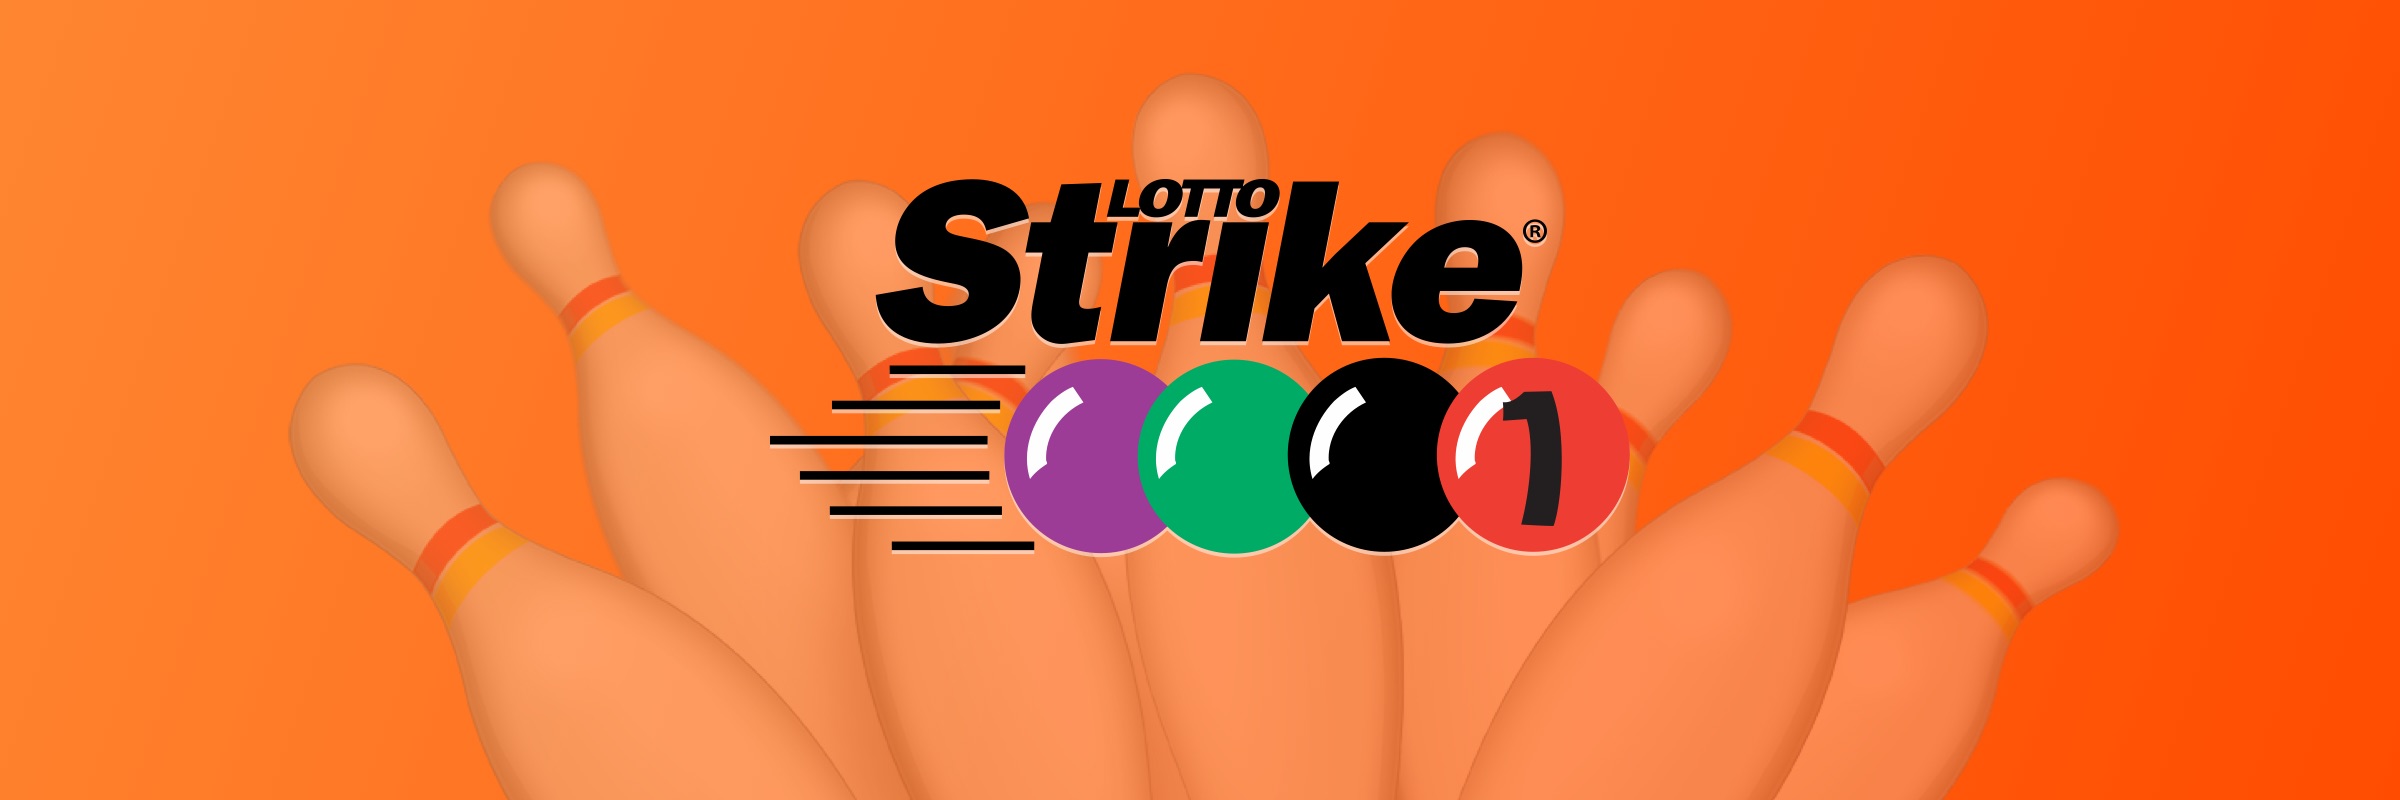 lotto strike must be won